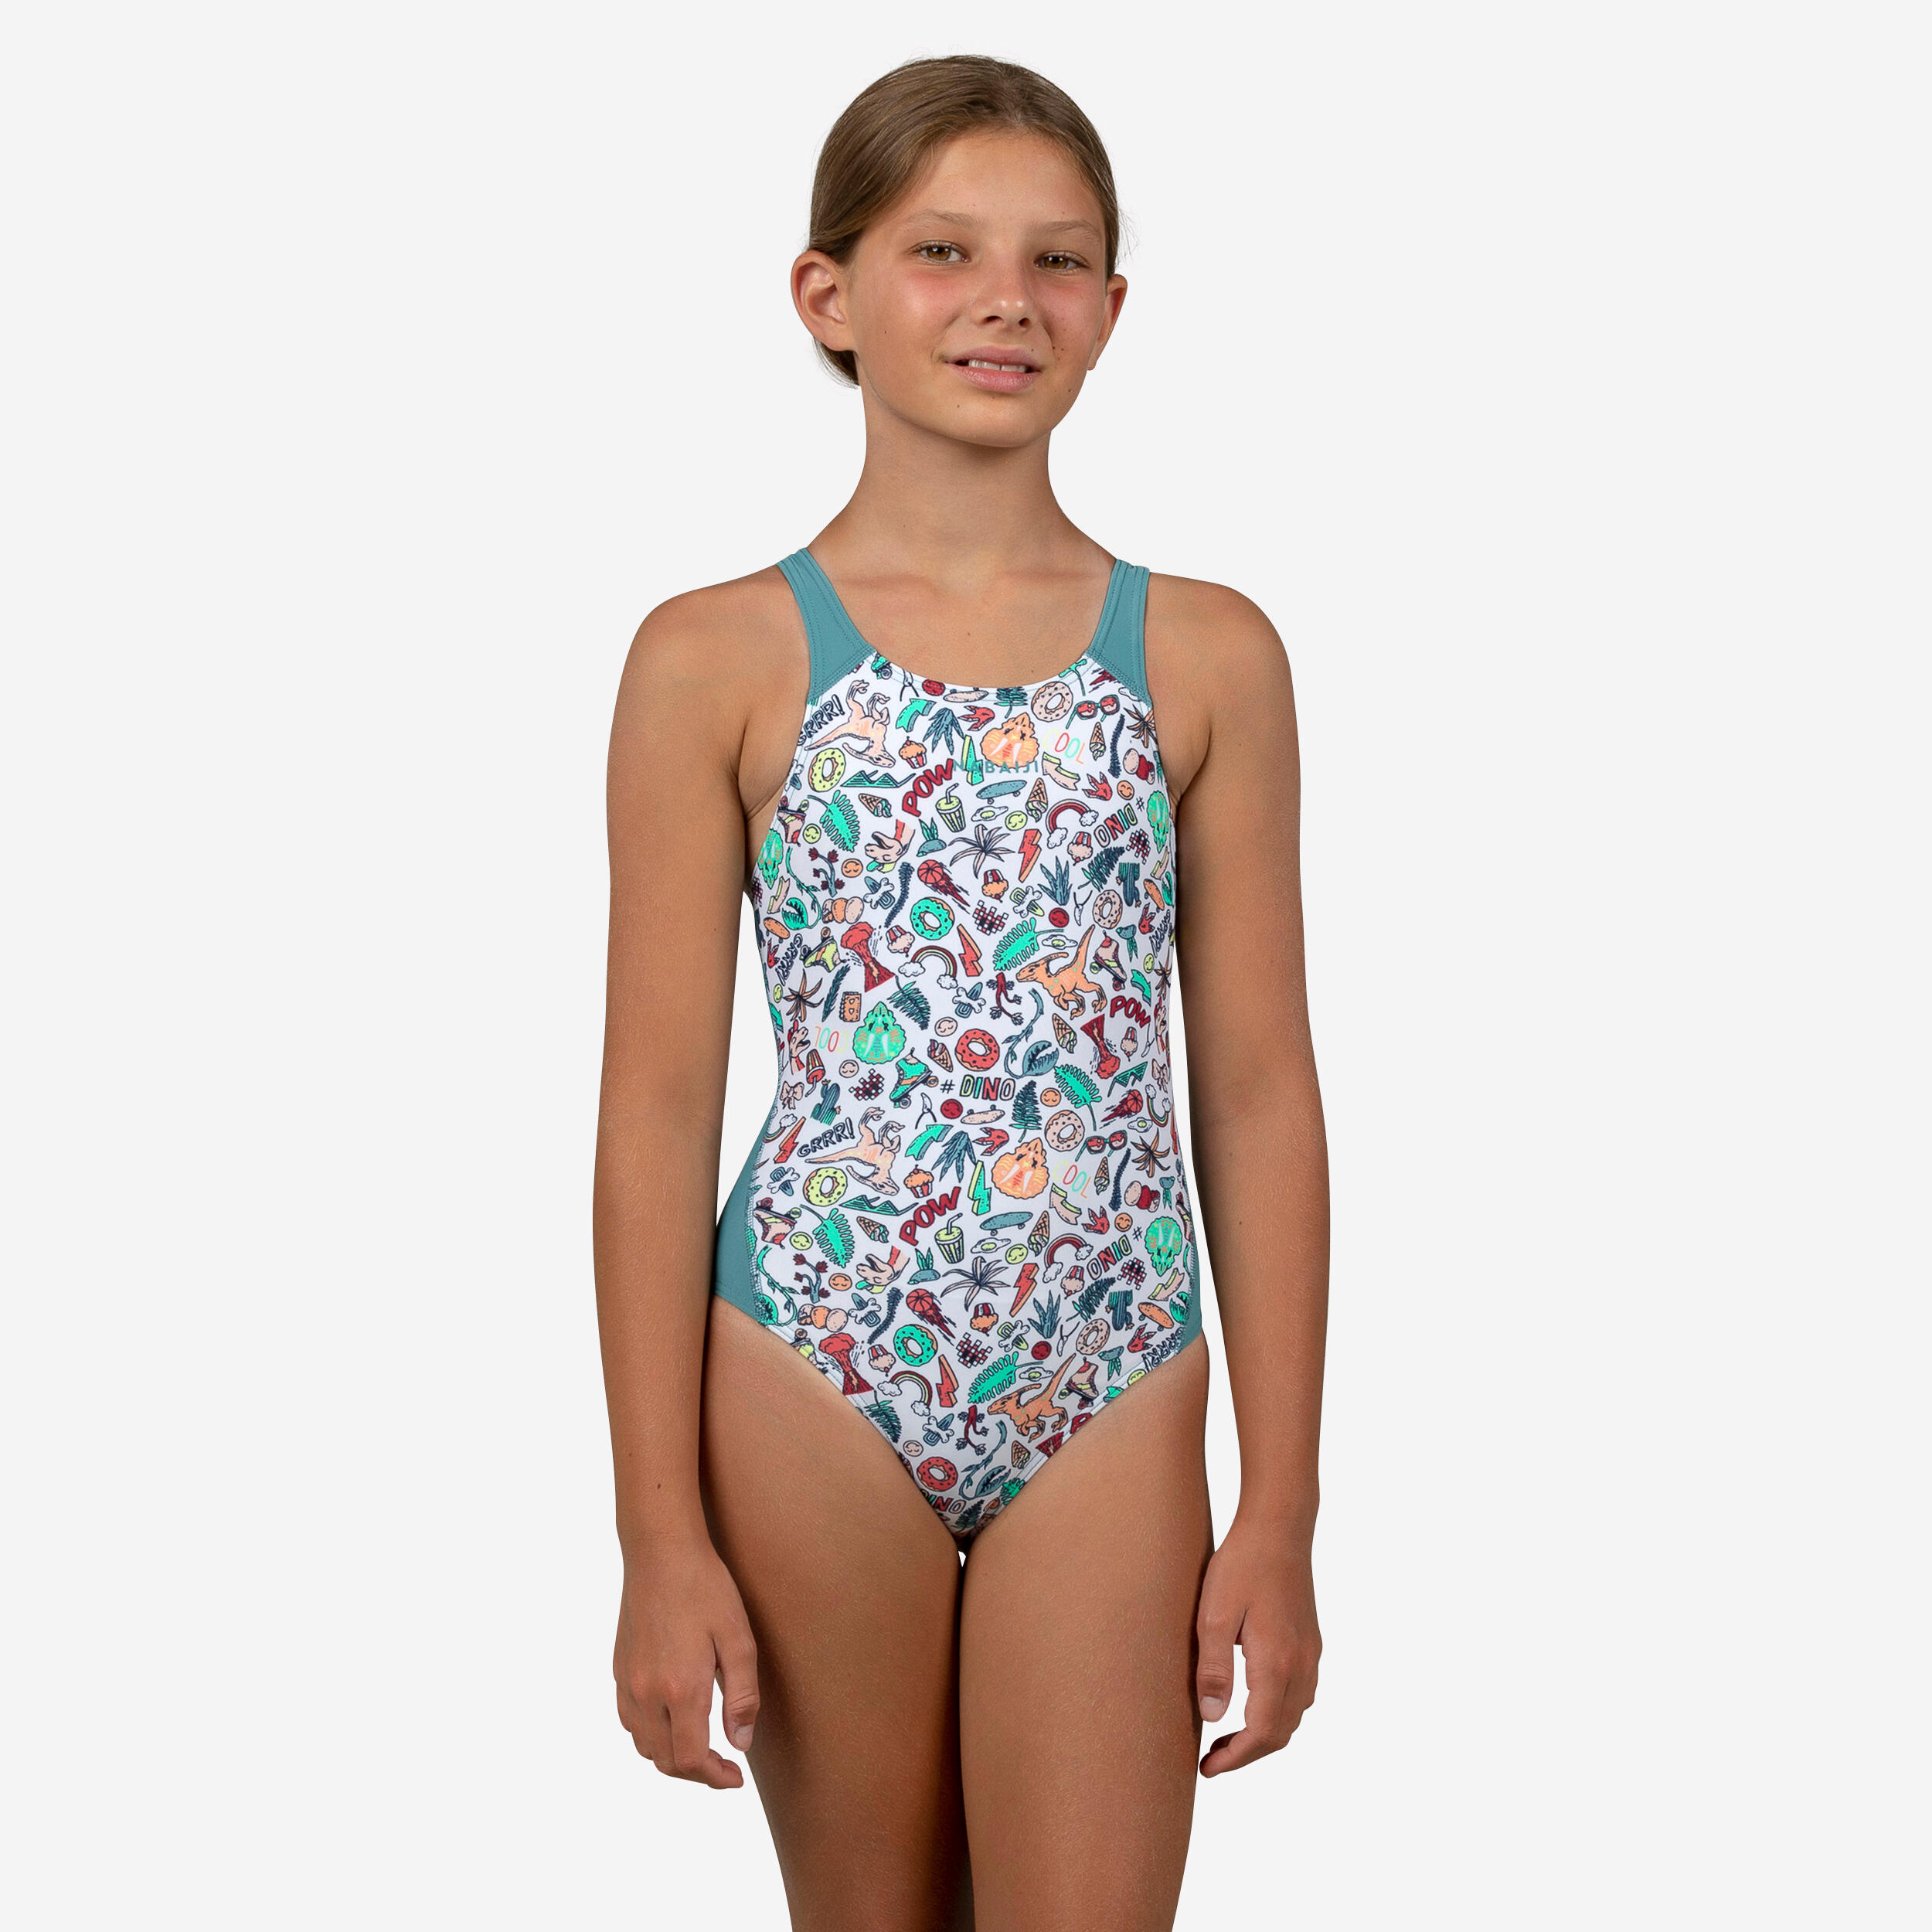 KAMYLEON 500 Girl's Swimsuit - Dino 1/4